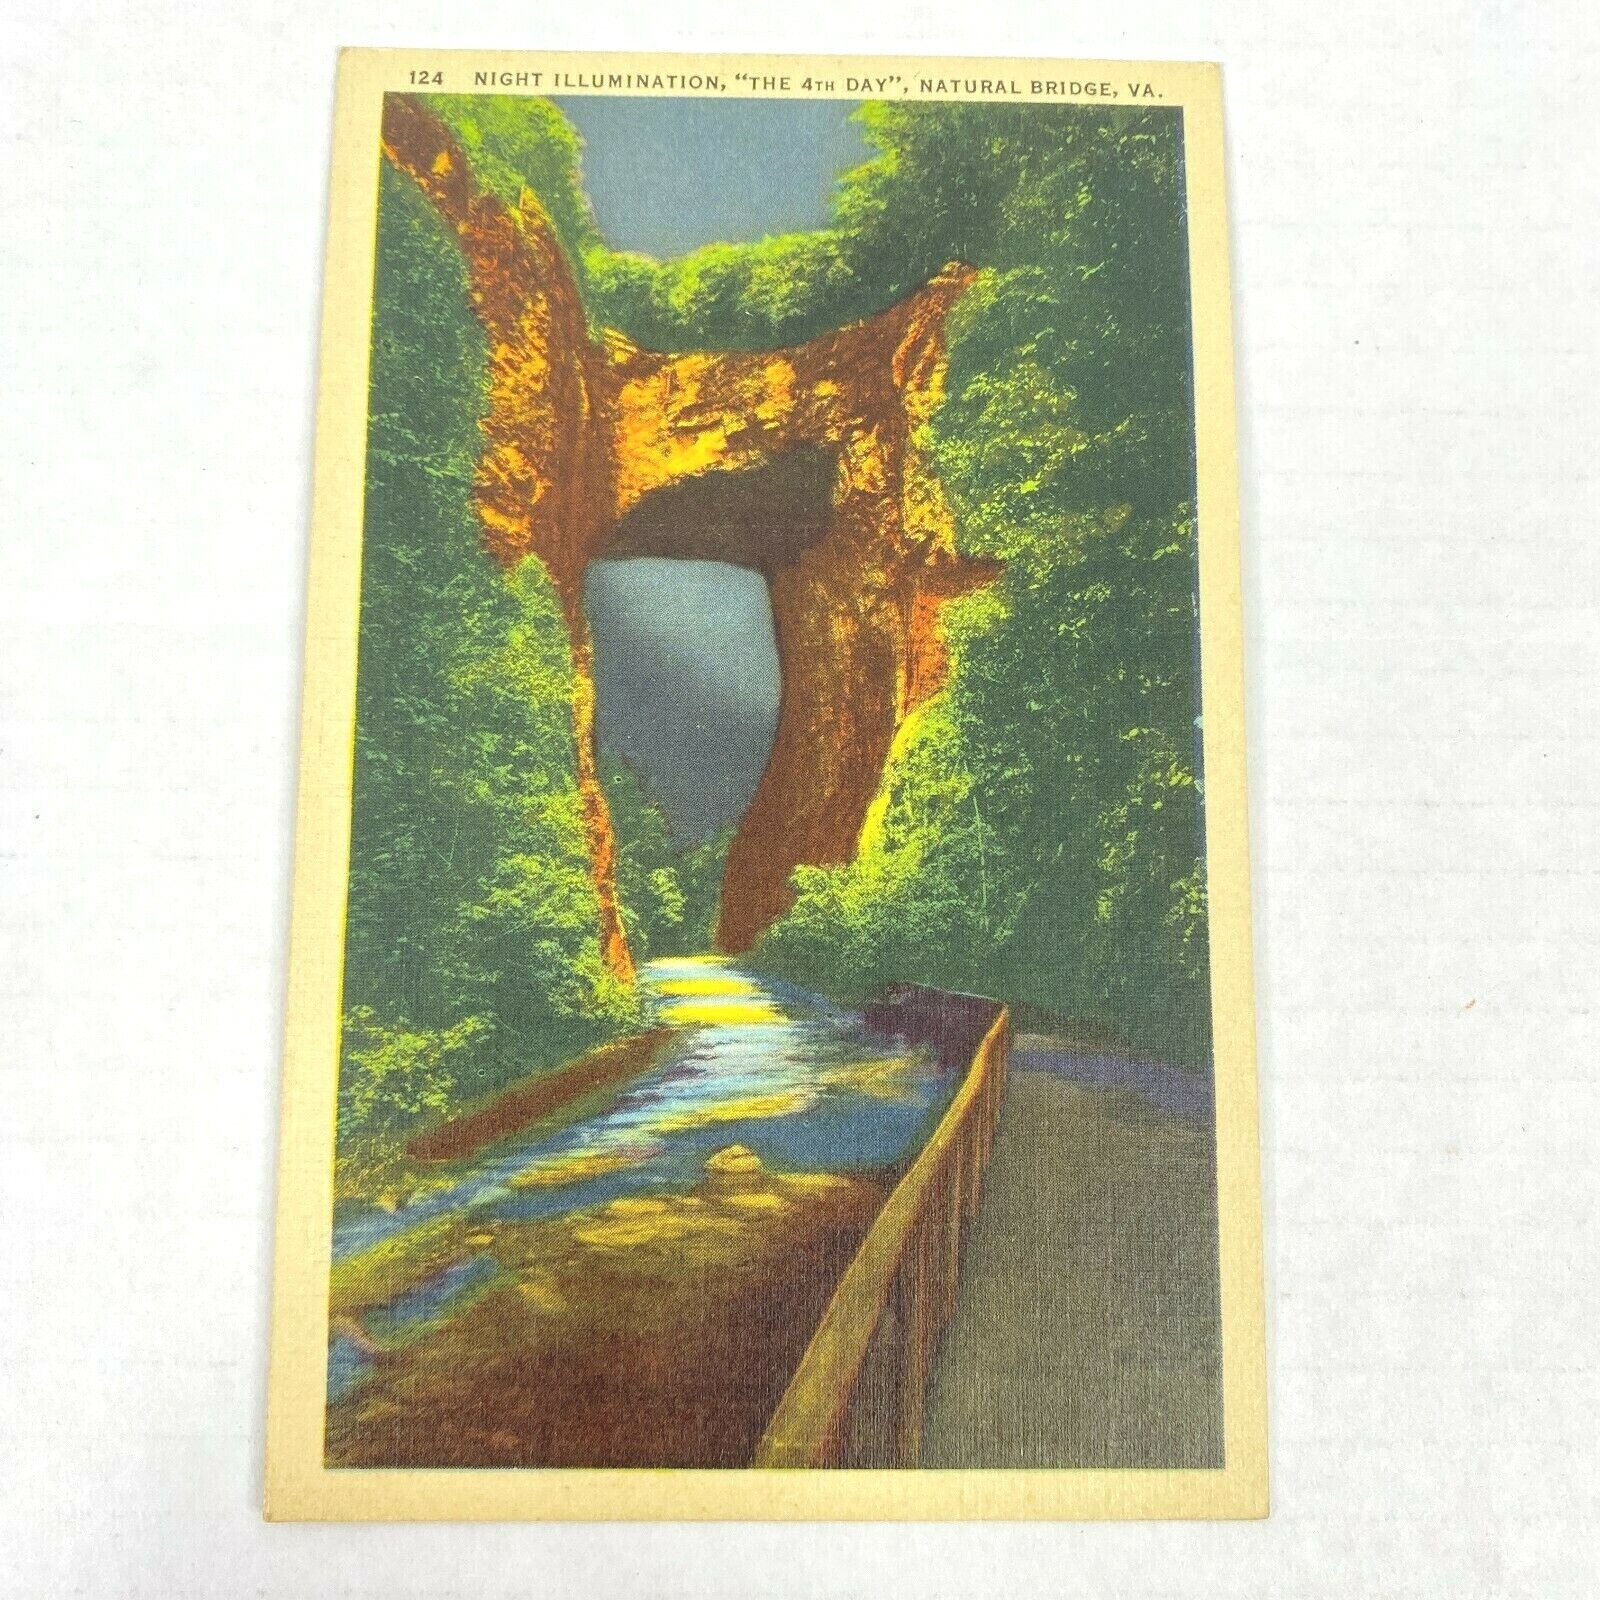 Vintage Postcard Natural Bridge Virginia Night Illumination 4th Day Travel 1930s